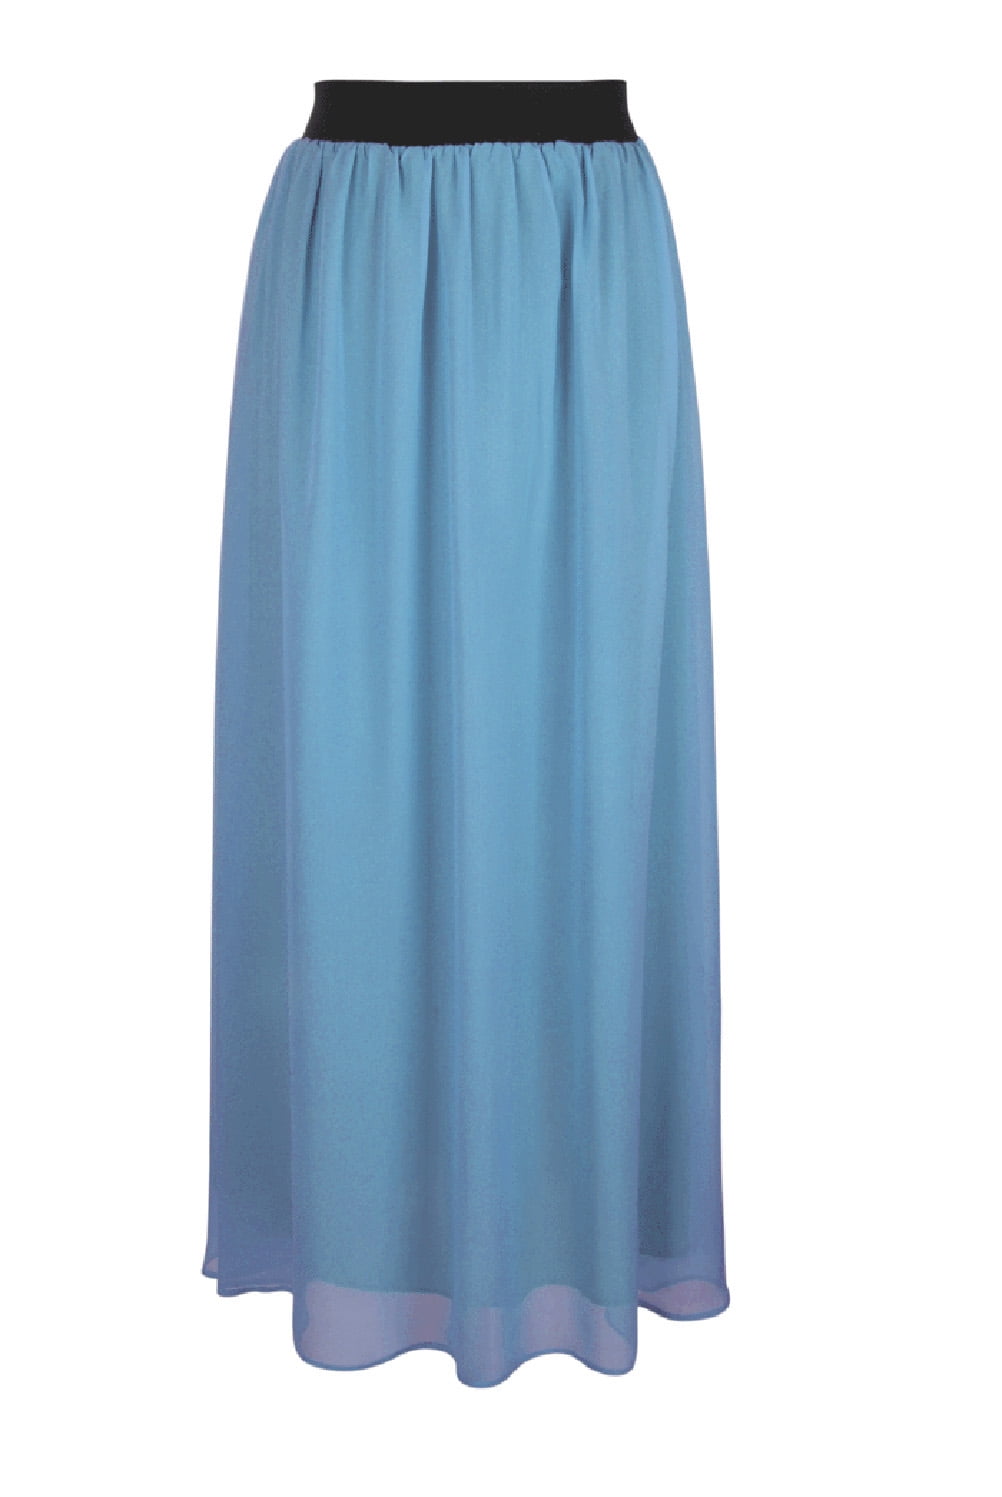 Faship - Faship Women Long Retro Pleated Maxi Skirt Sky Blue - Sky Blue ...